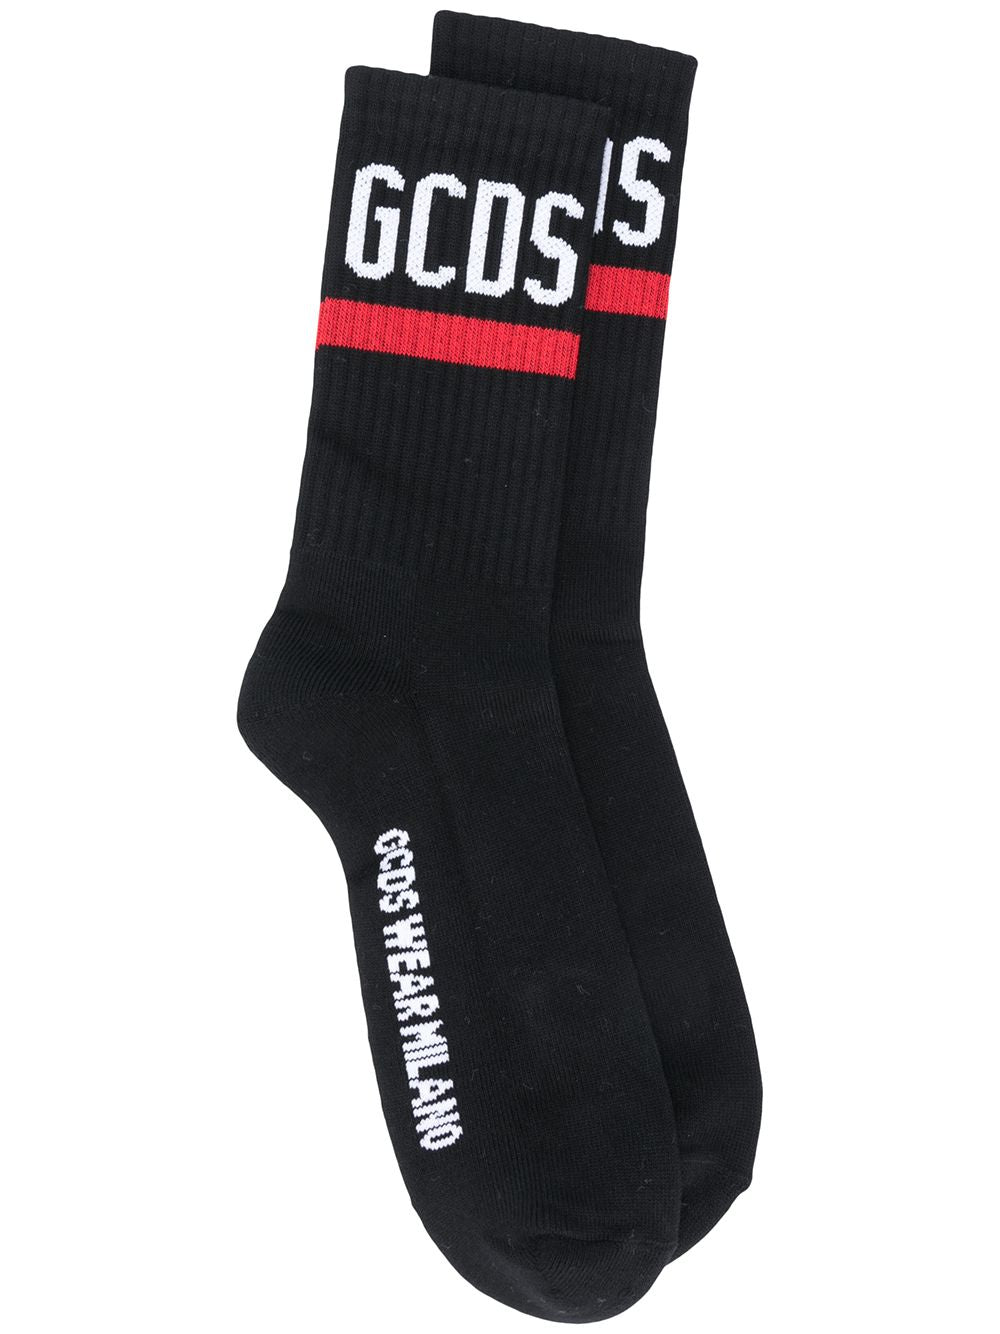 Black/red/white cotton logo band socks